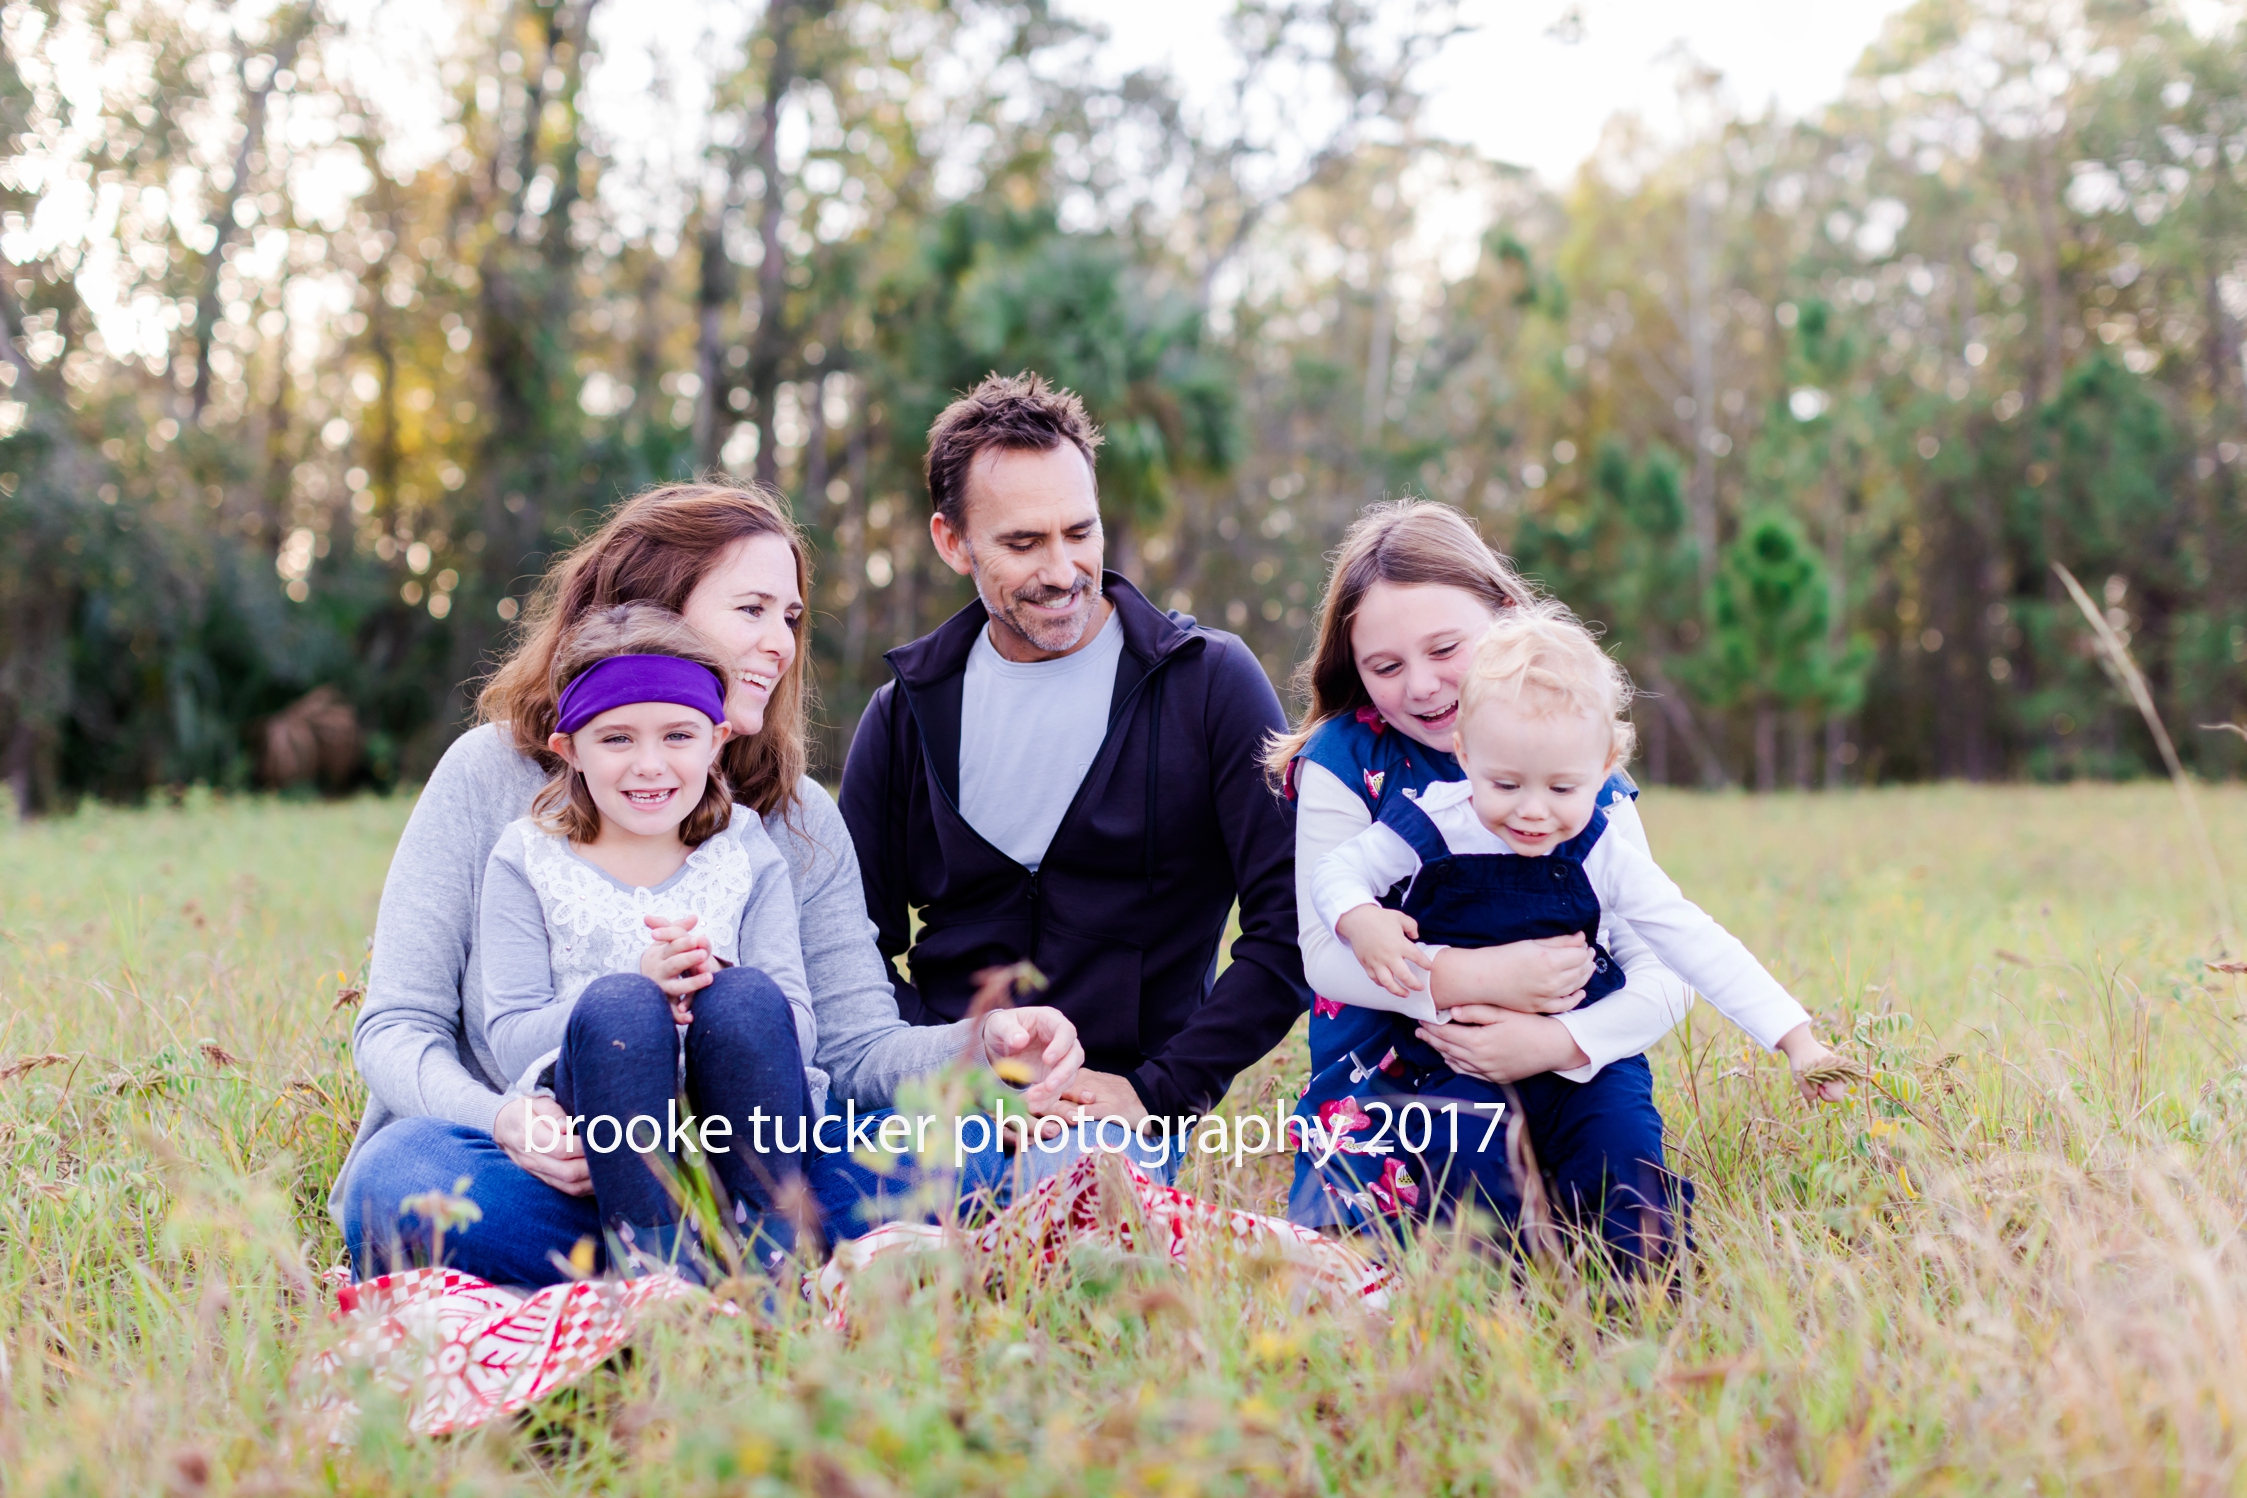 Florida Lifestyle Family photographer brooke tucker